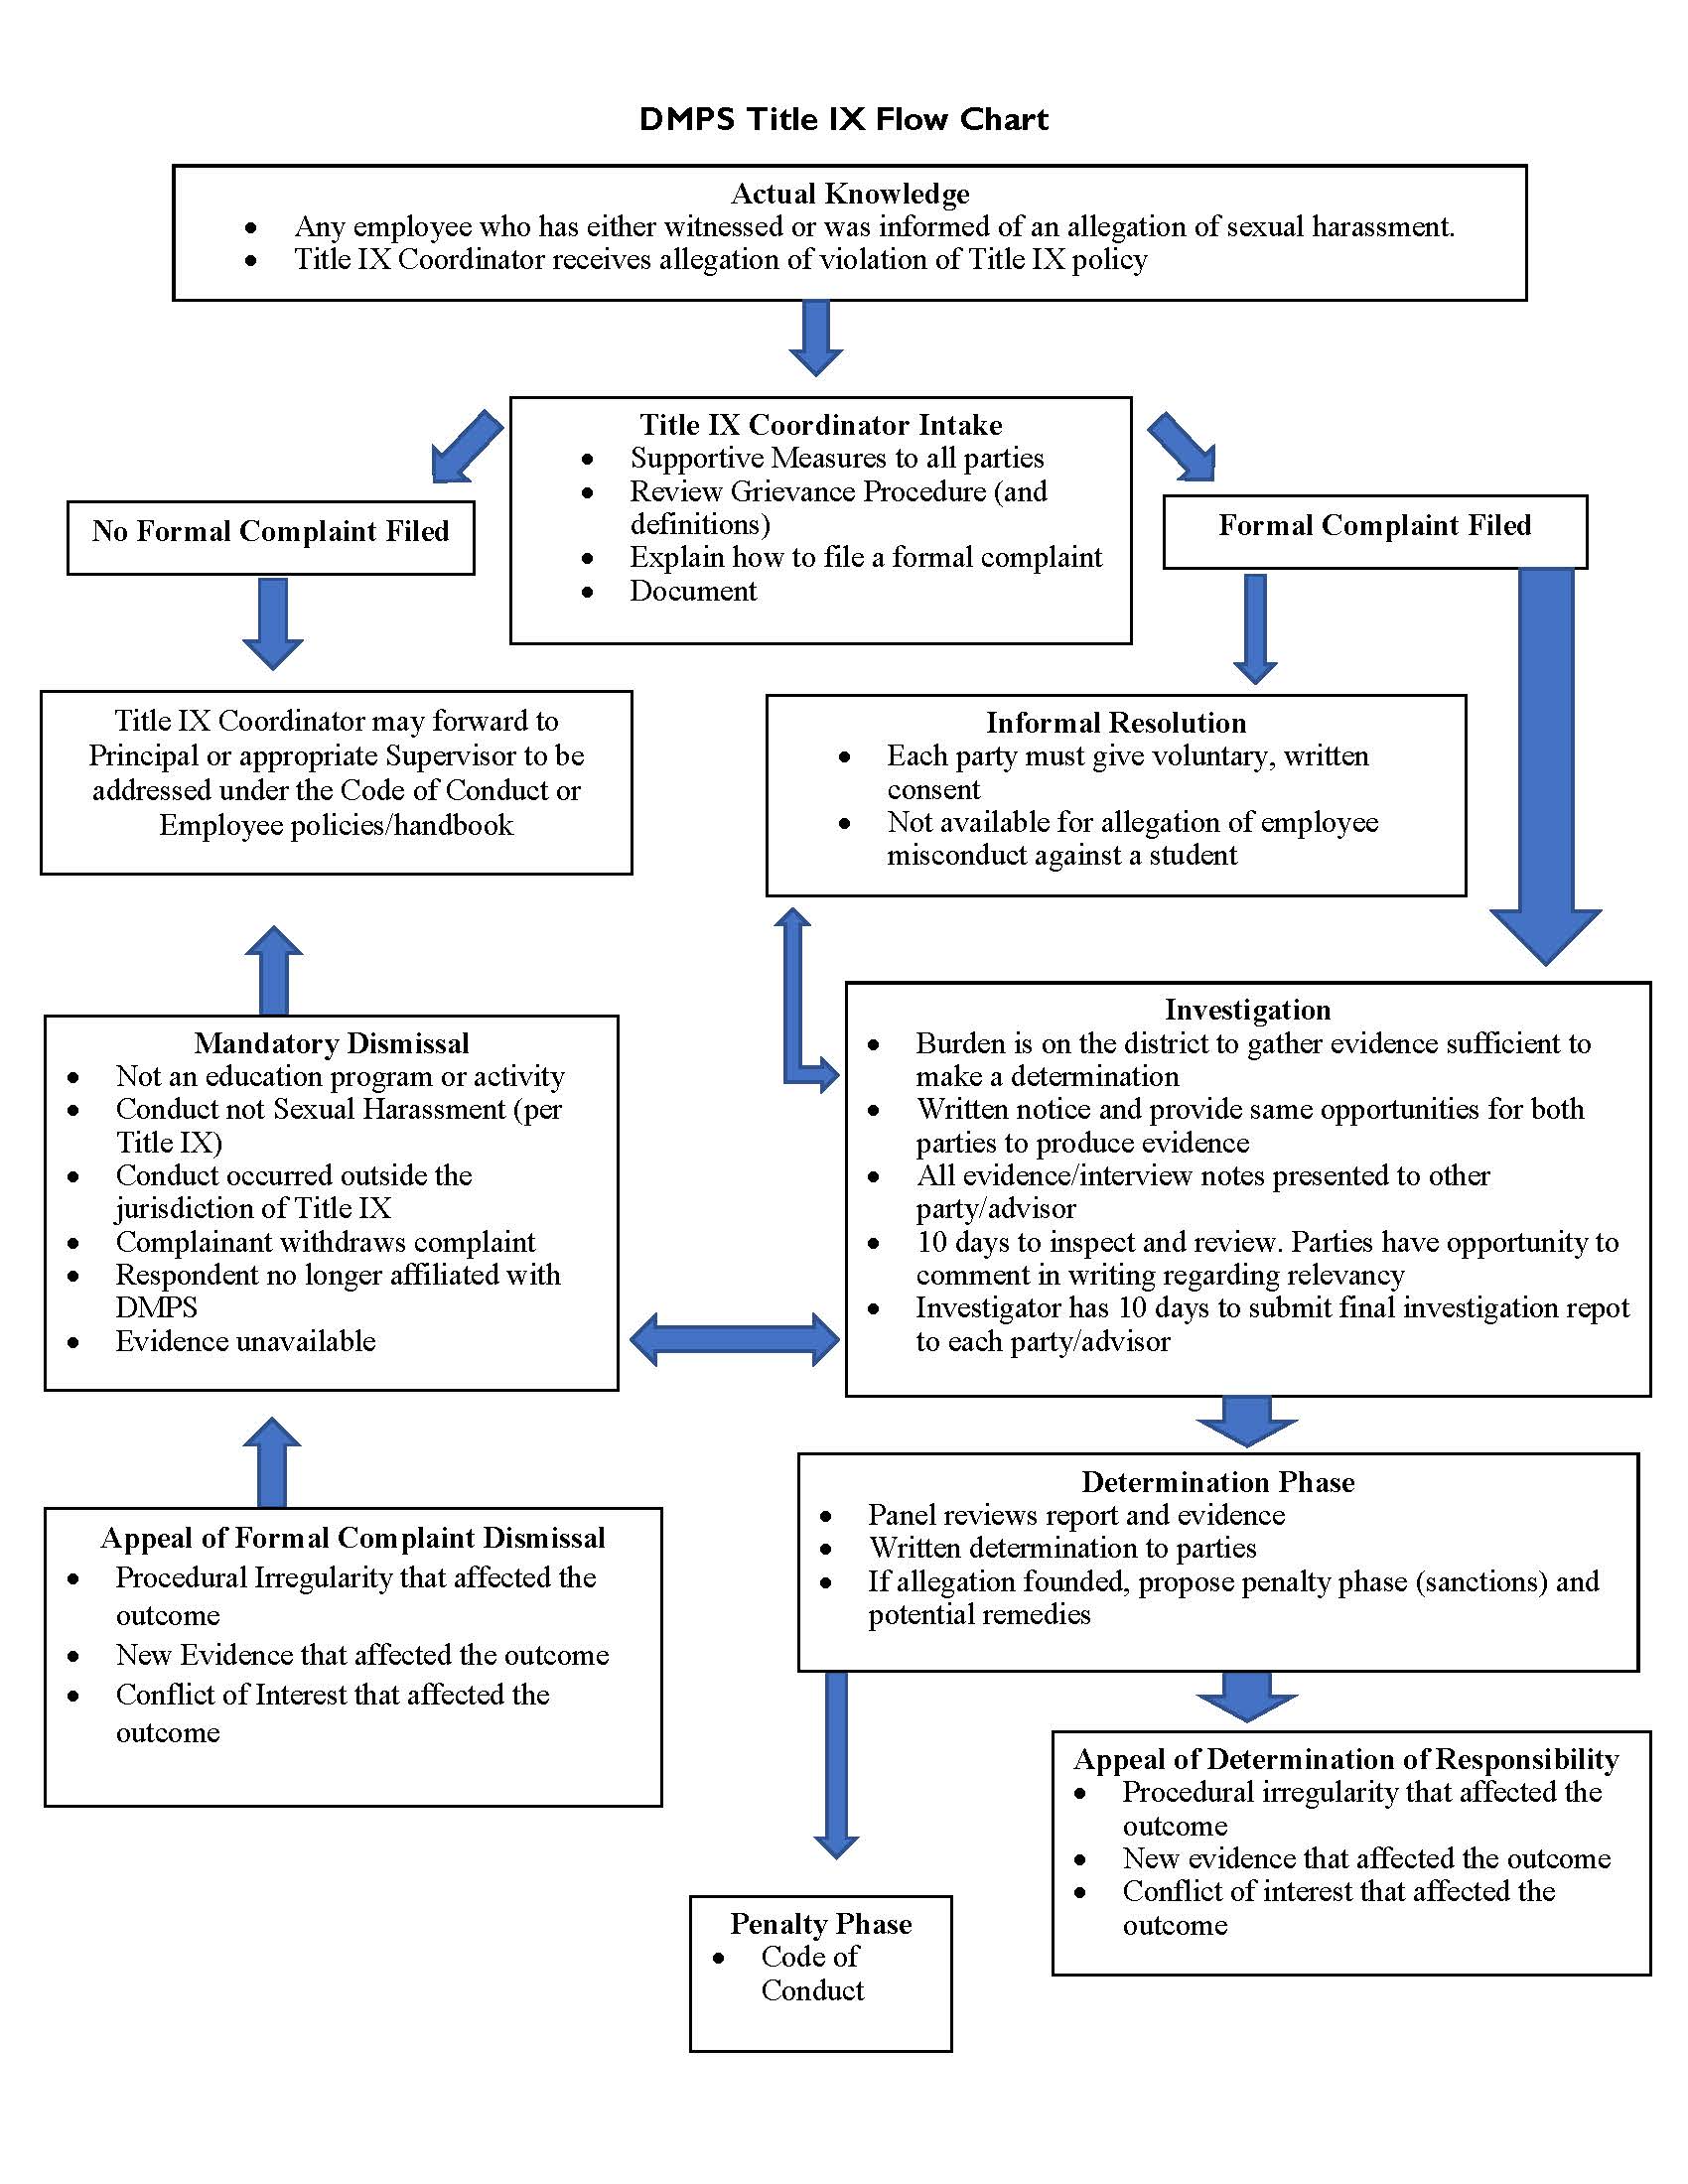 https://www.dmschools.org/wp-content/uploads/2021/07/Title-IX-Flow-Chart-Overview.jpg